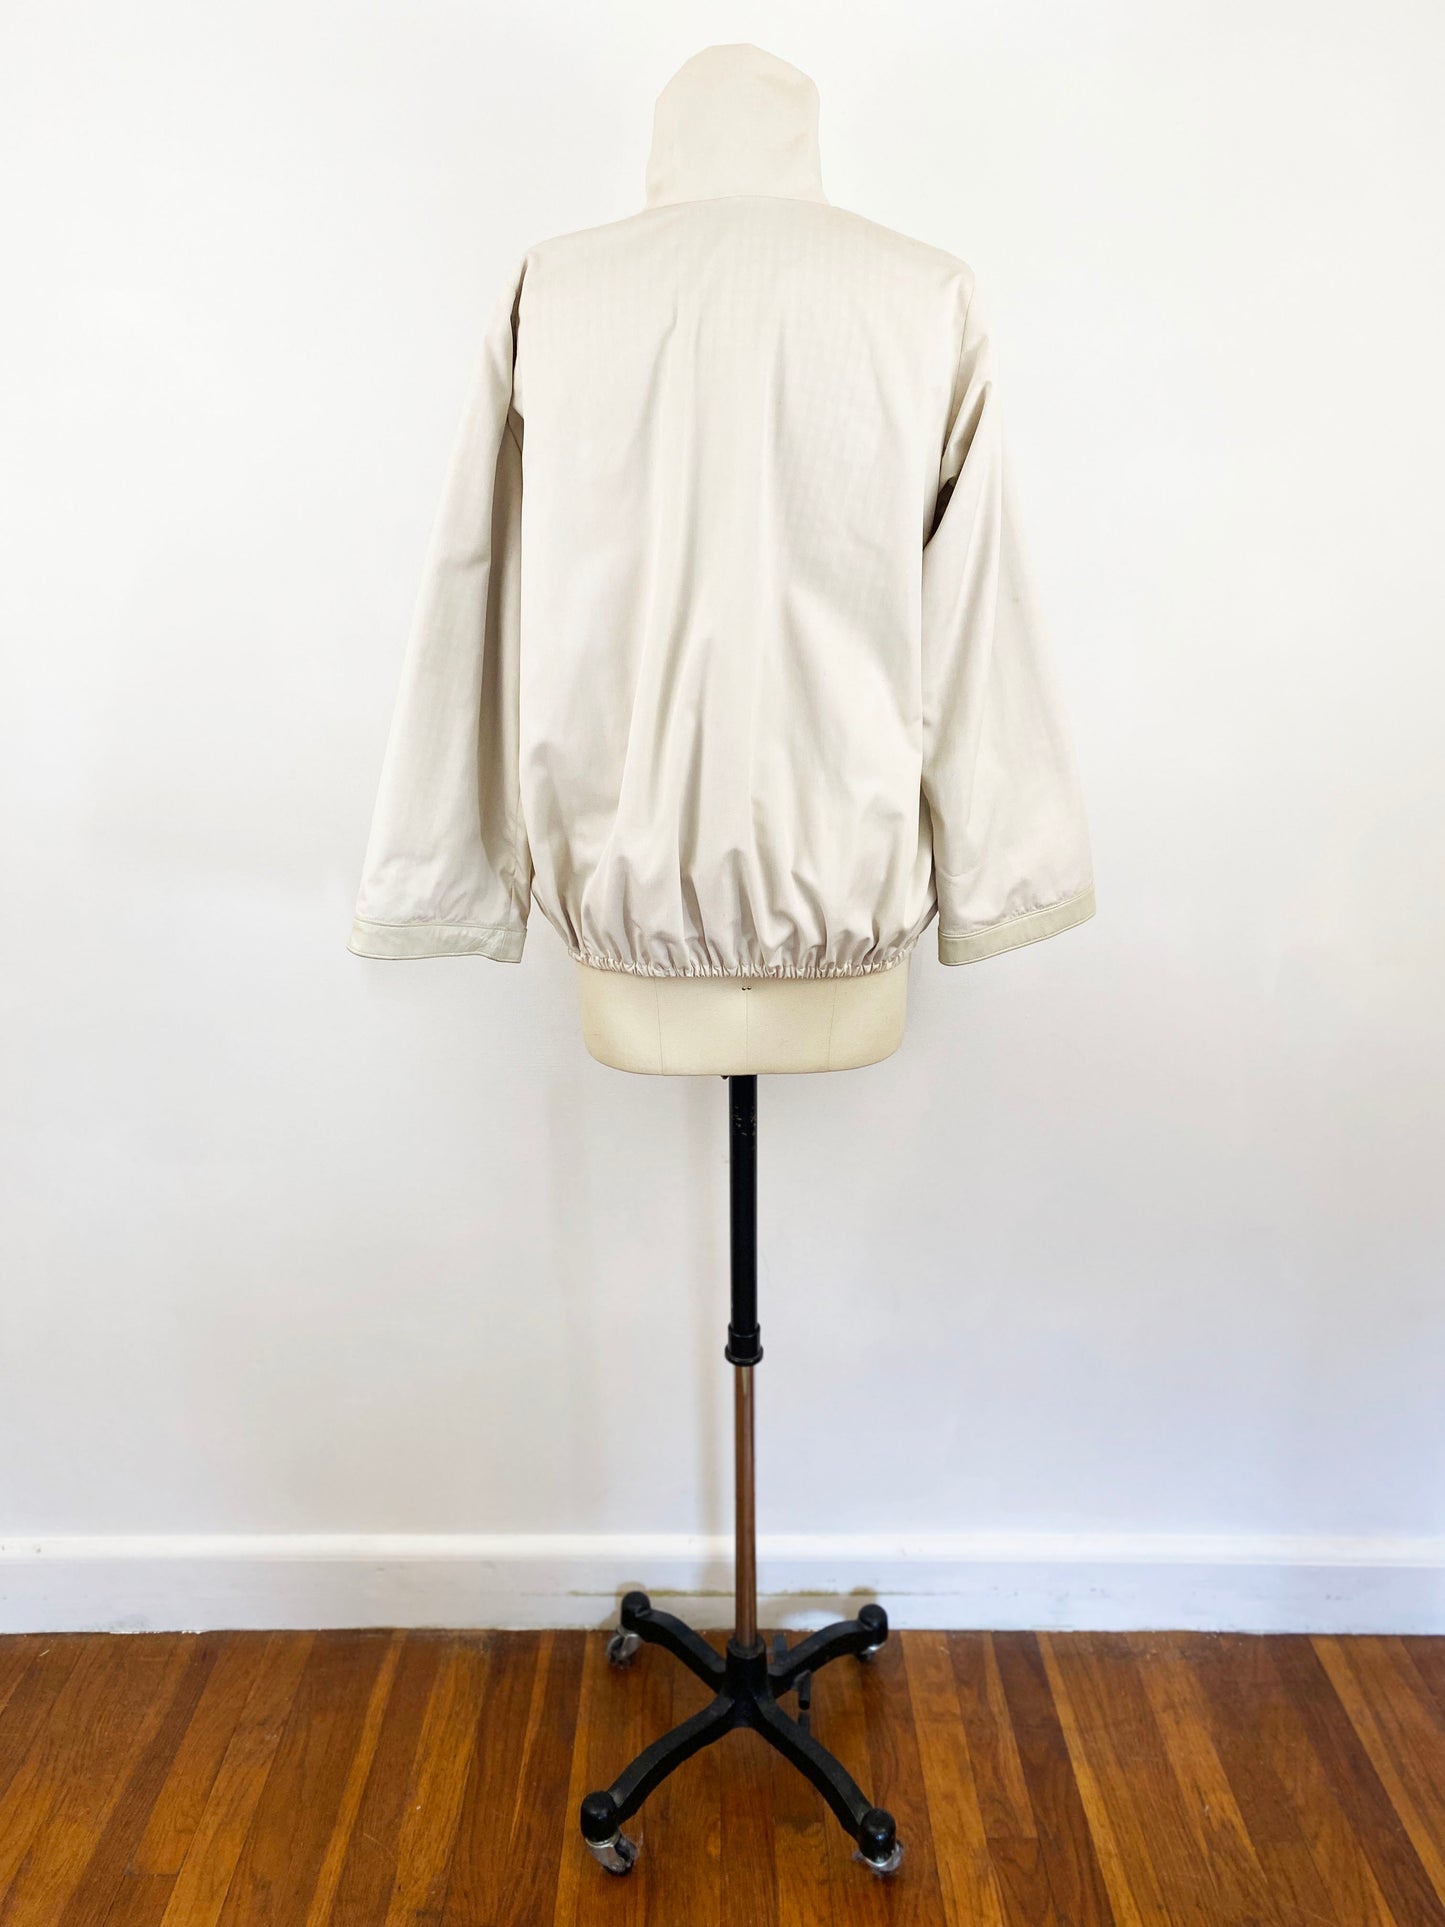 1960s Bonnie Cashin Sills Light Tan Cotton and Leather Bomber Jacket Turn Lock Minimalist Designer Mod / Size Medium-Large